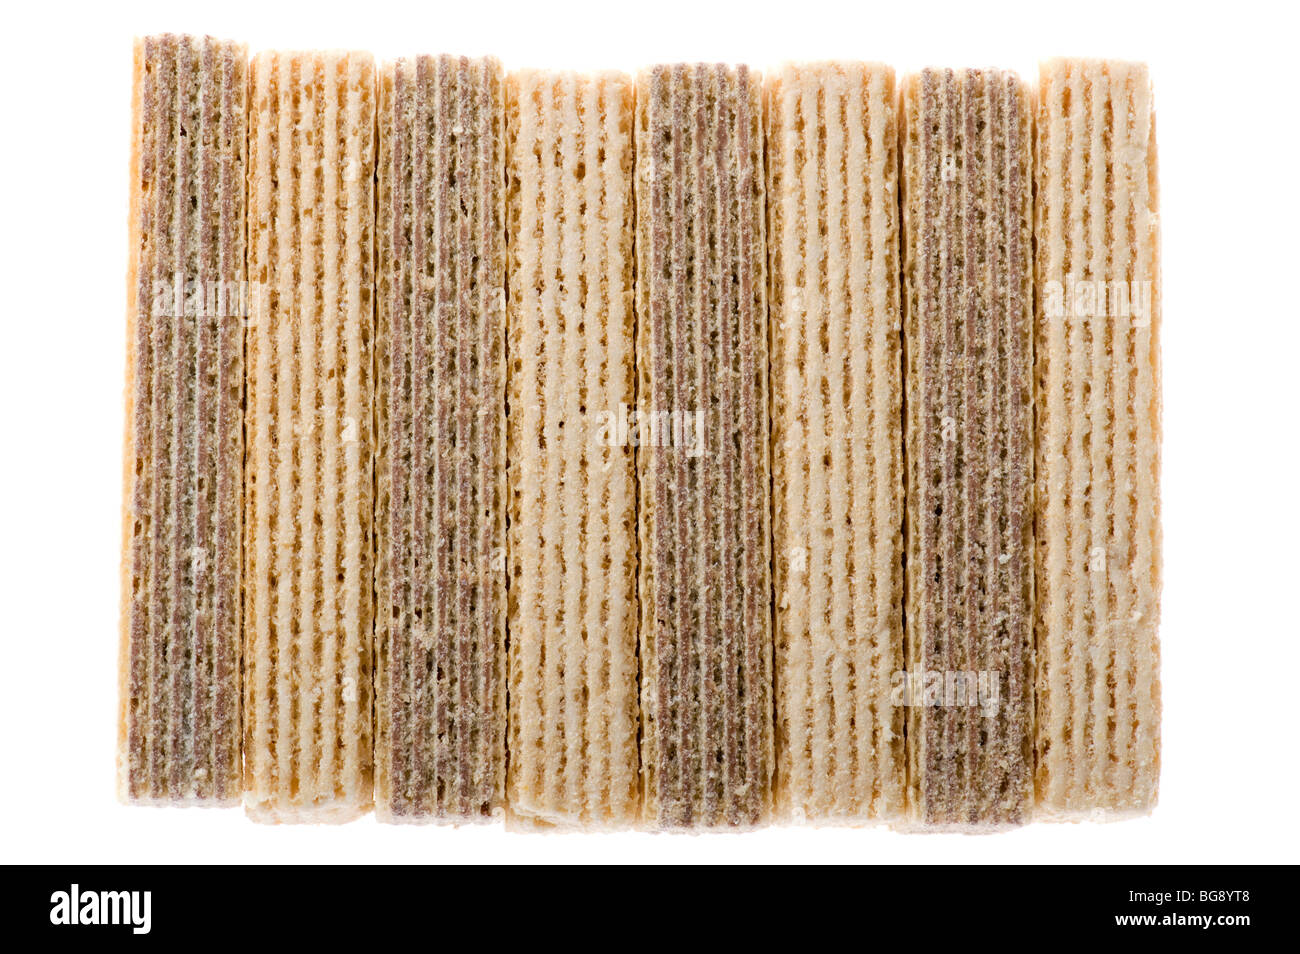 object isolatsd on white background food wafer Stock Photo